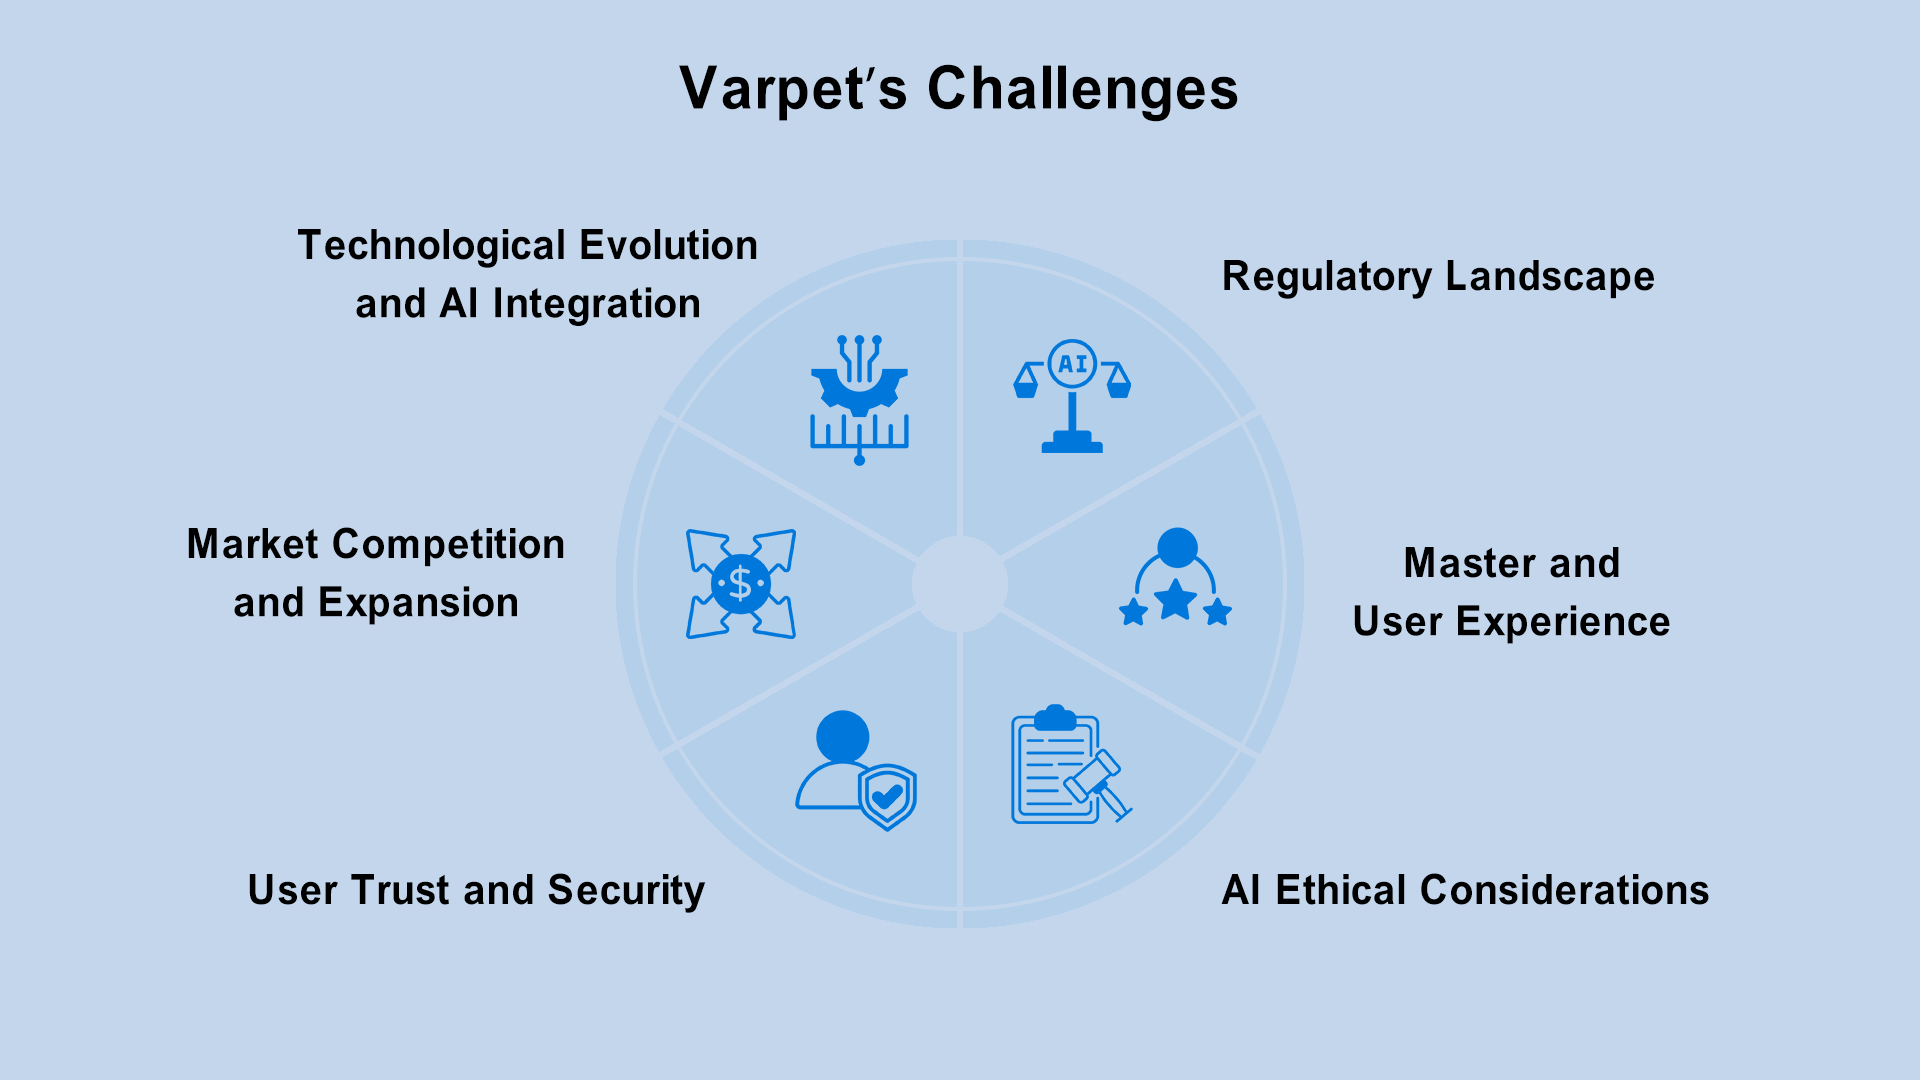 varpet's challenges